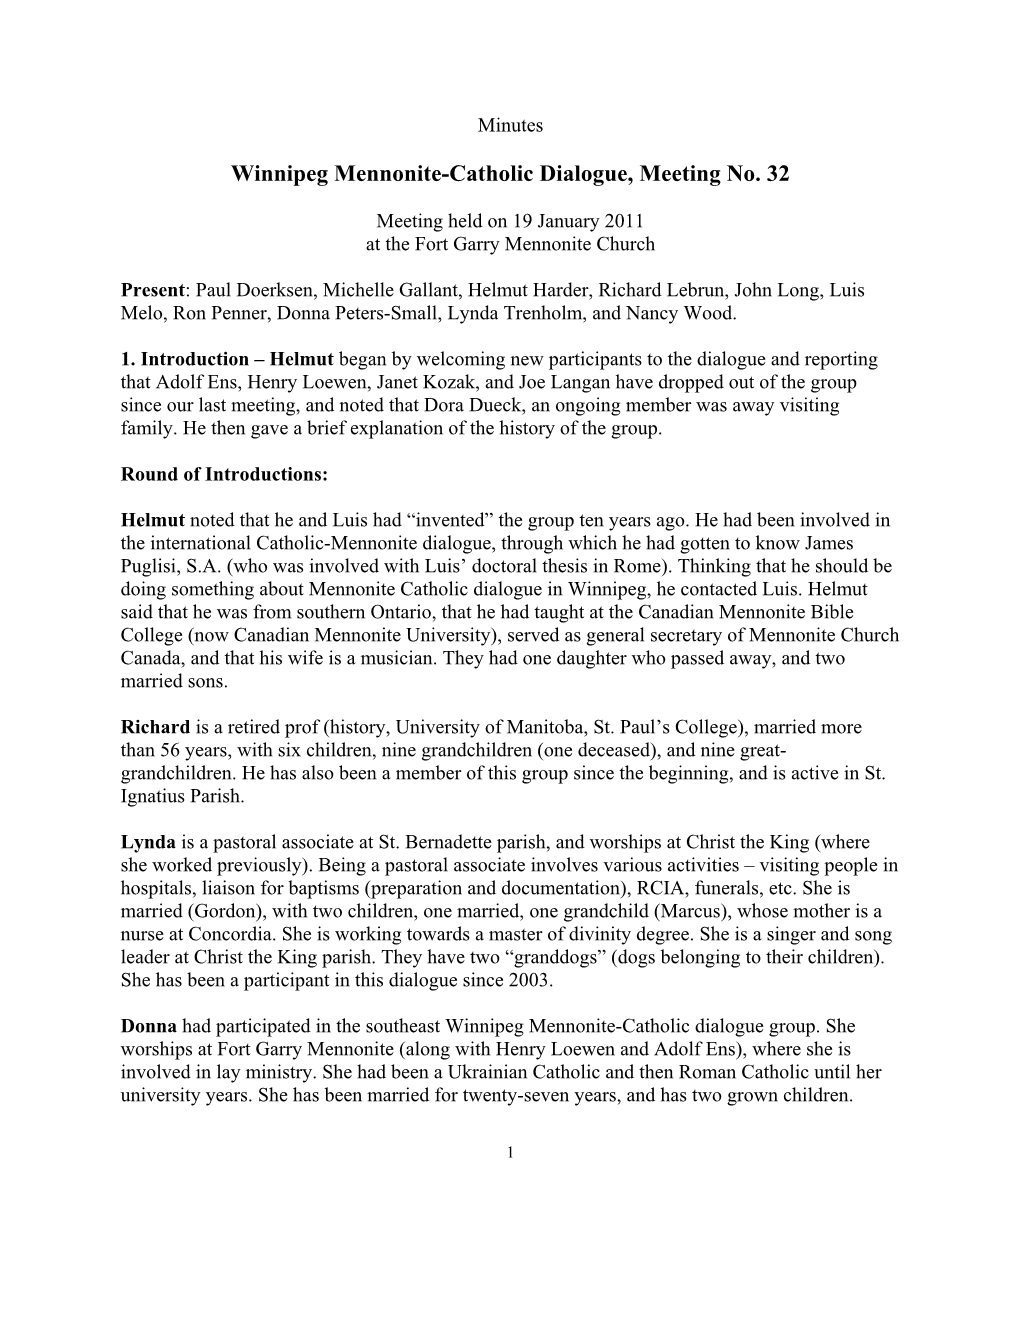 Winnipeg Regional Mennonite-Catholic Dialogue